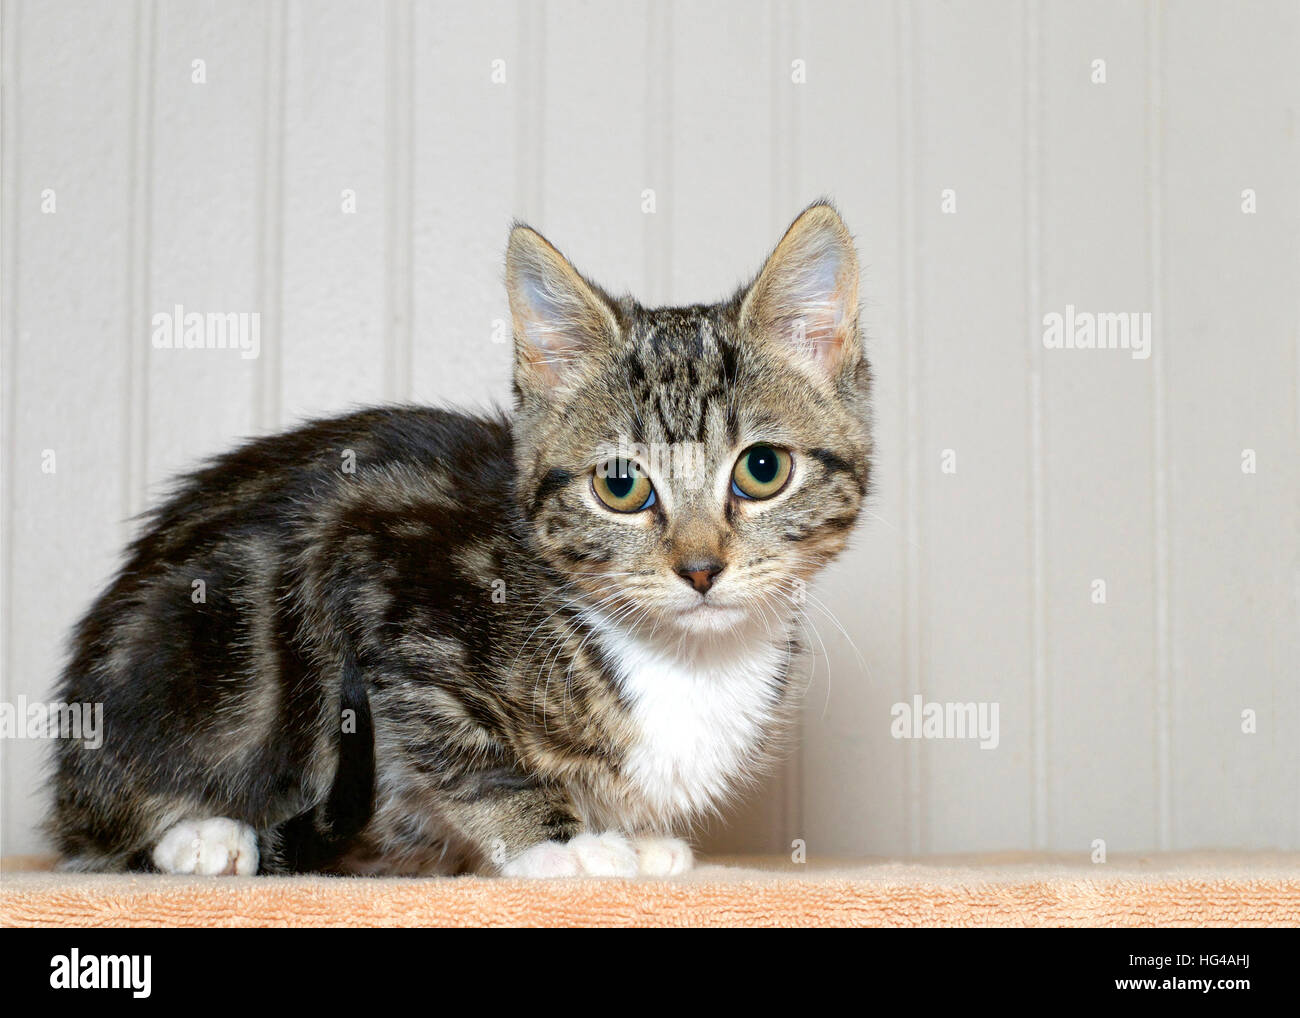 gray and black striped tabby kitten 